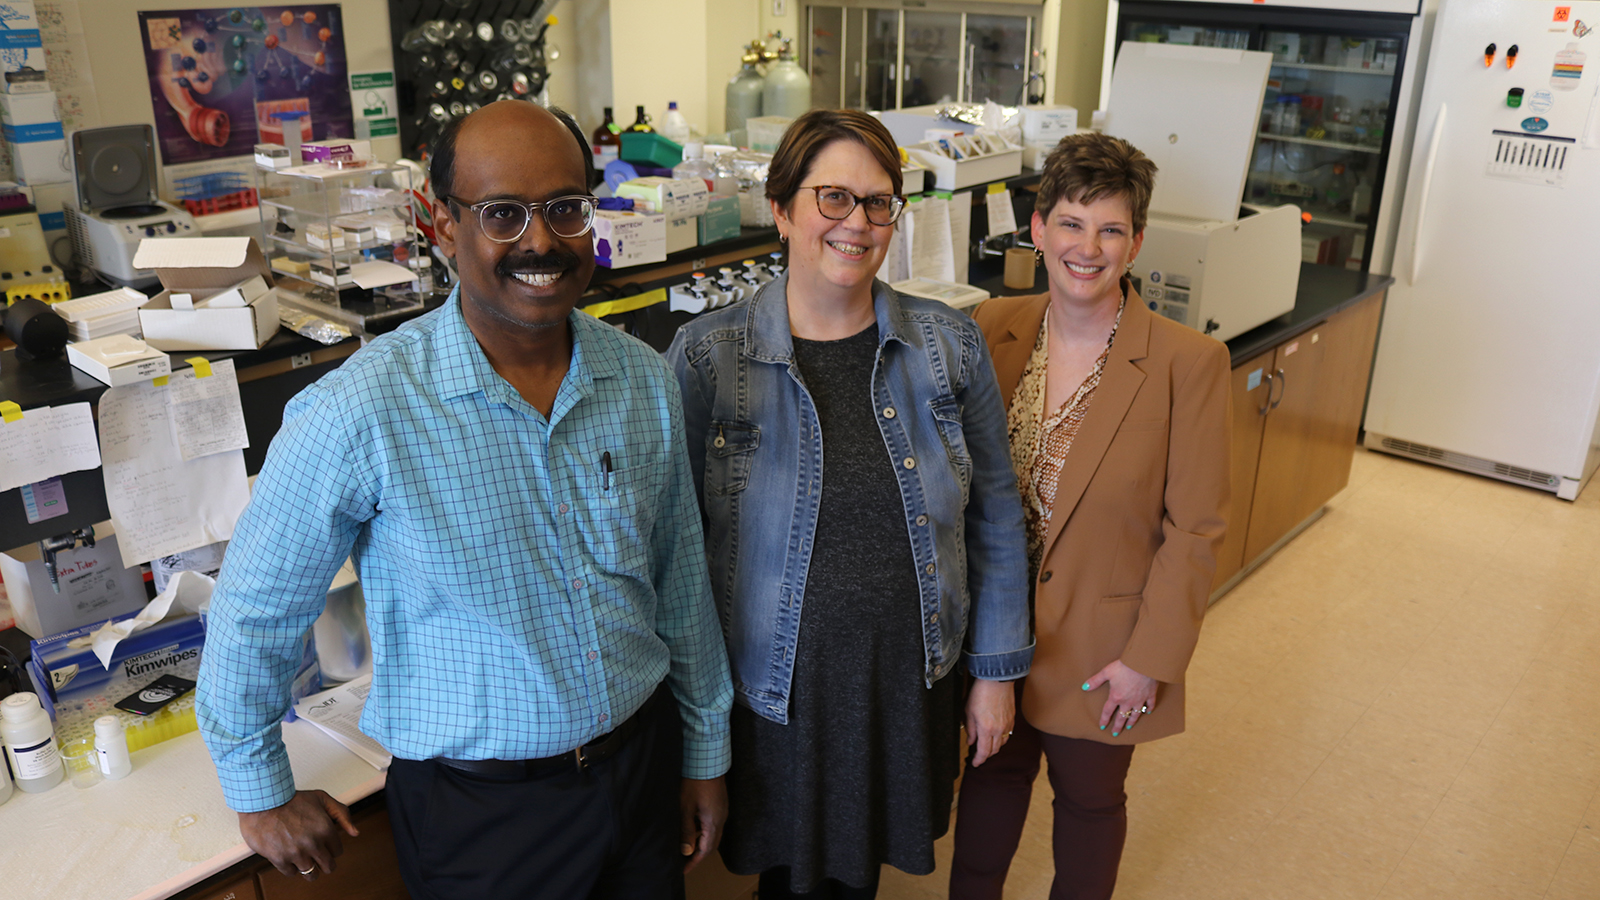 Sathish Kumar Natarajan, Jennifer Wood and Amanda Ramer-Tait pose for a photo in Sathish's research lab